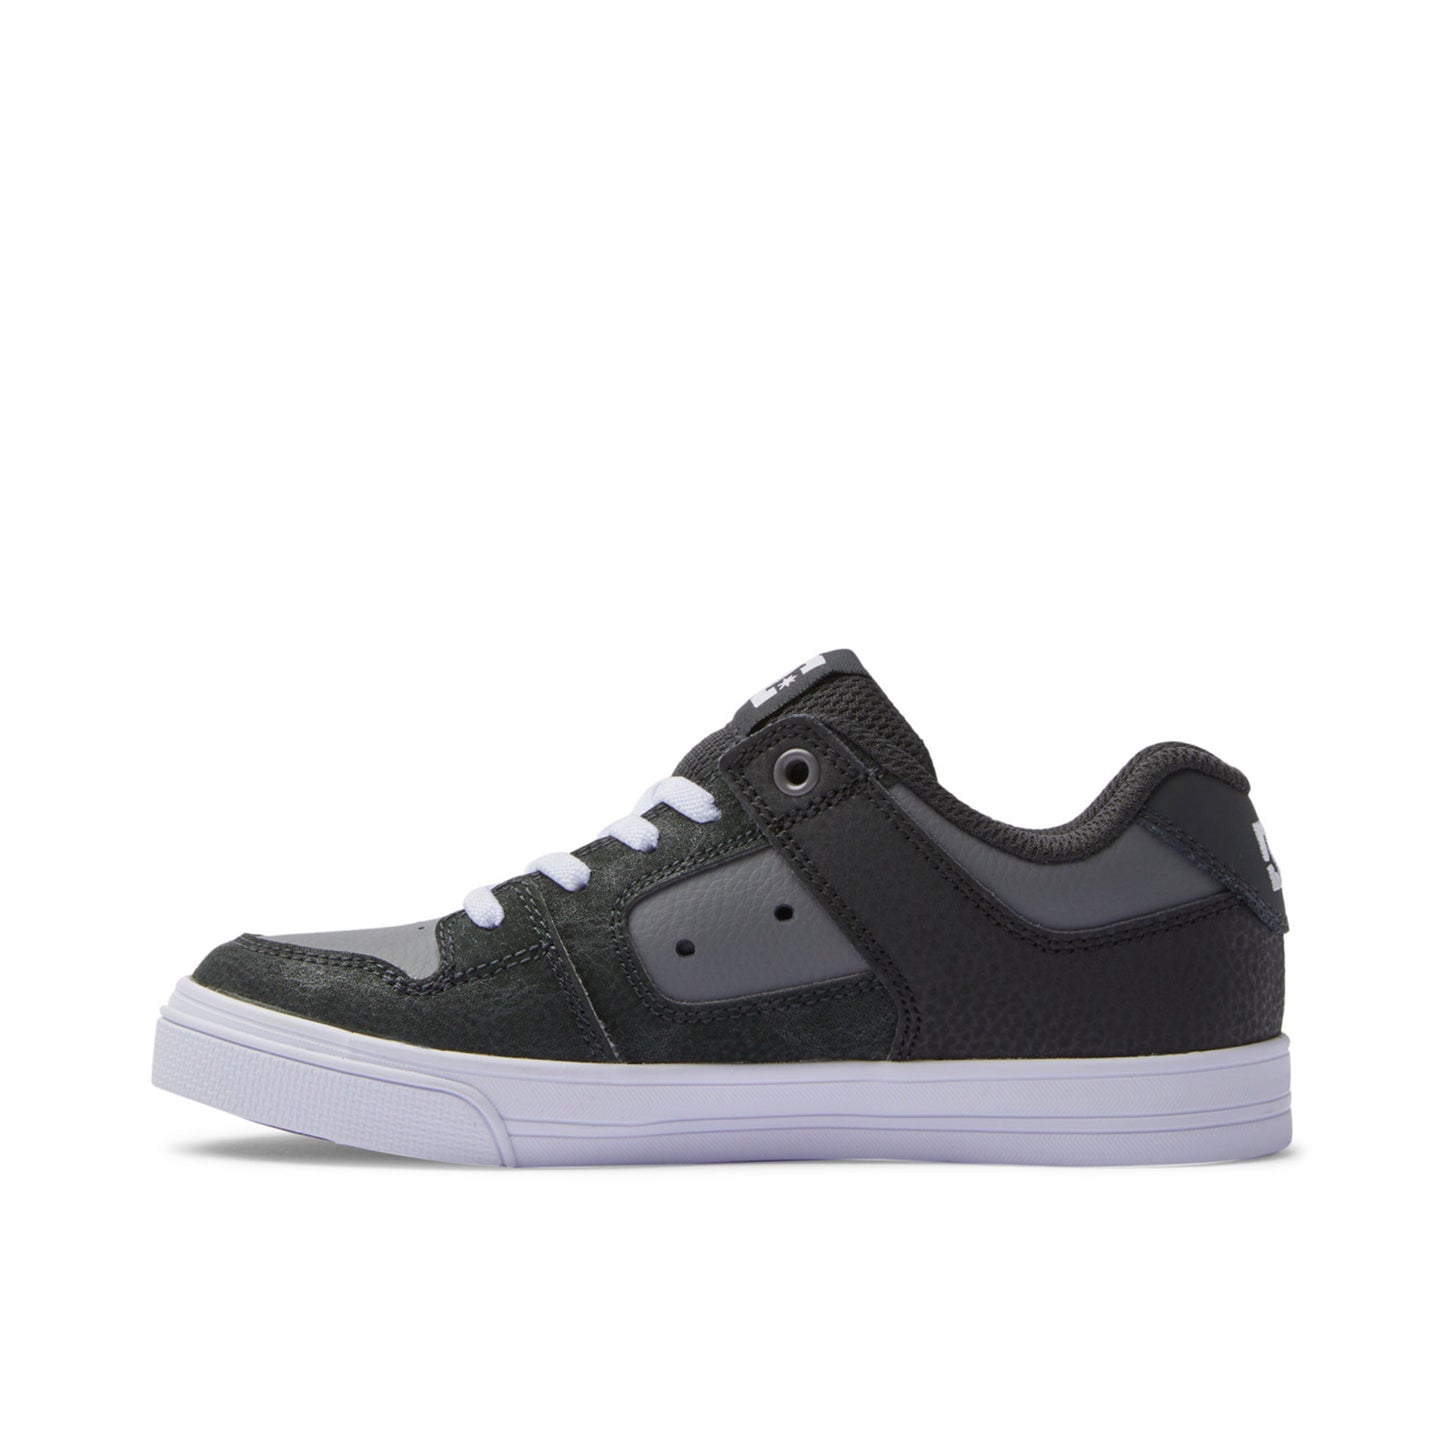 DC Pure Elastic Kids Shoes - Anthracite/ Black - Prime Delux Store